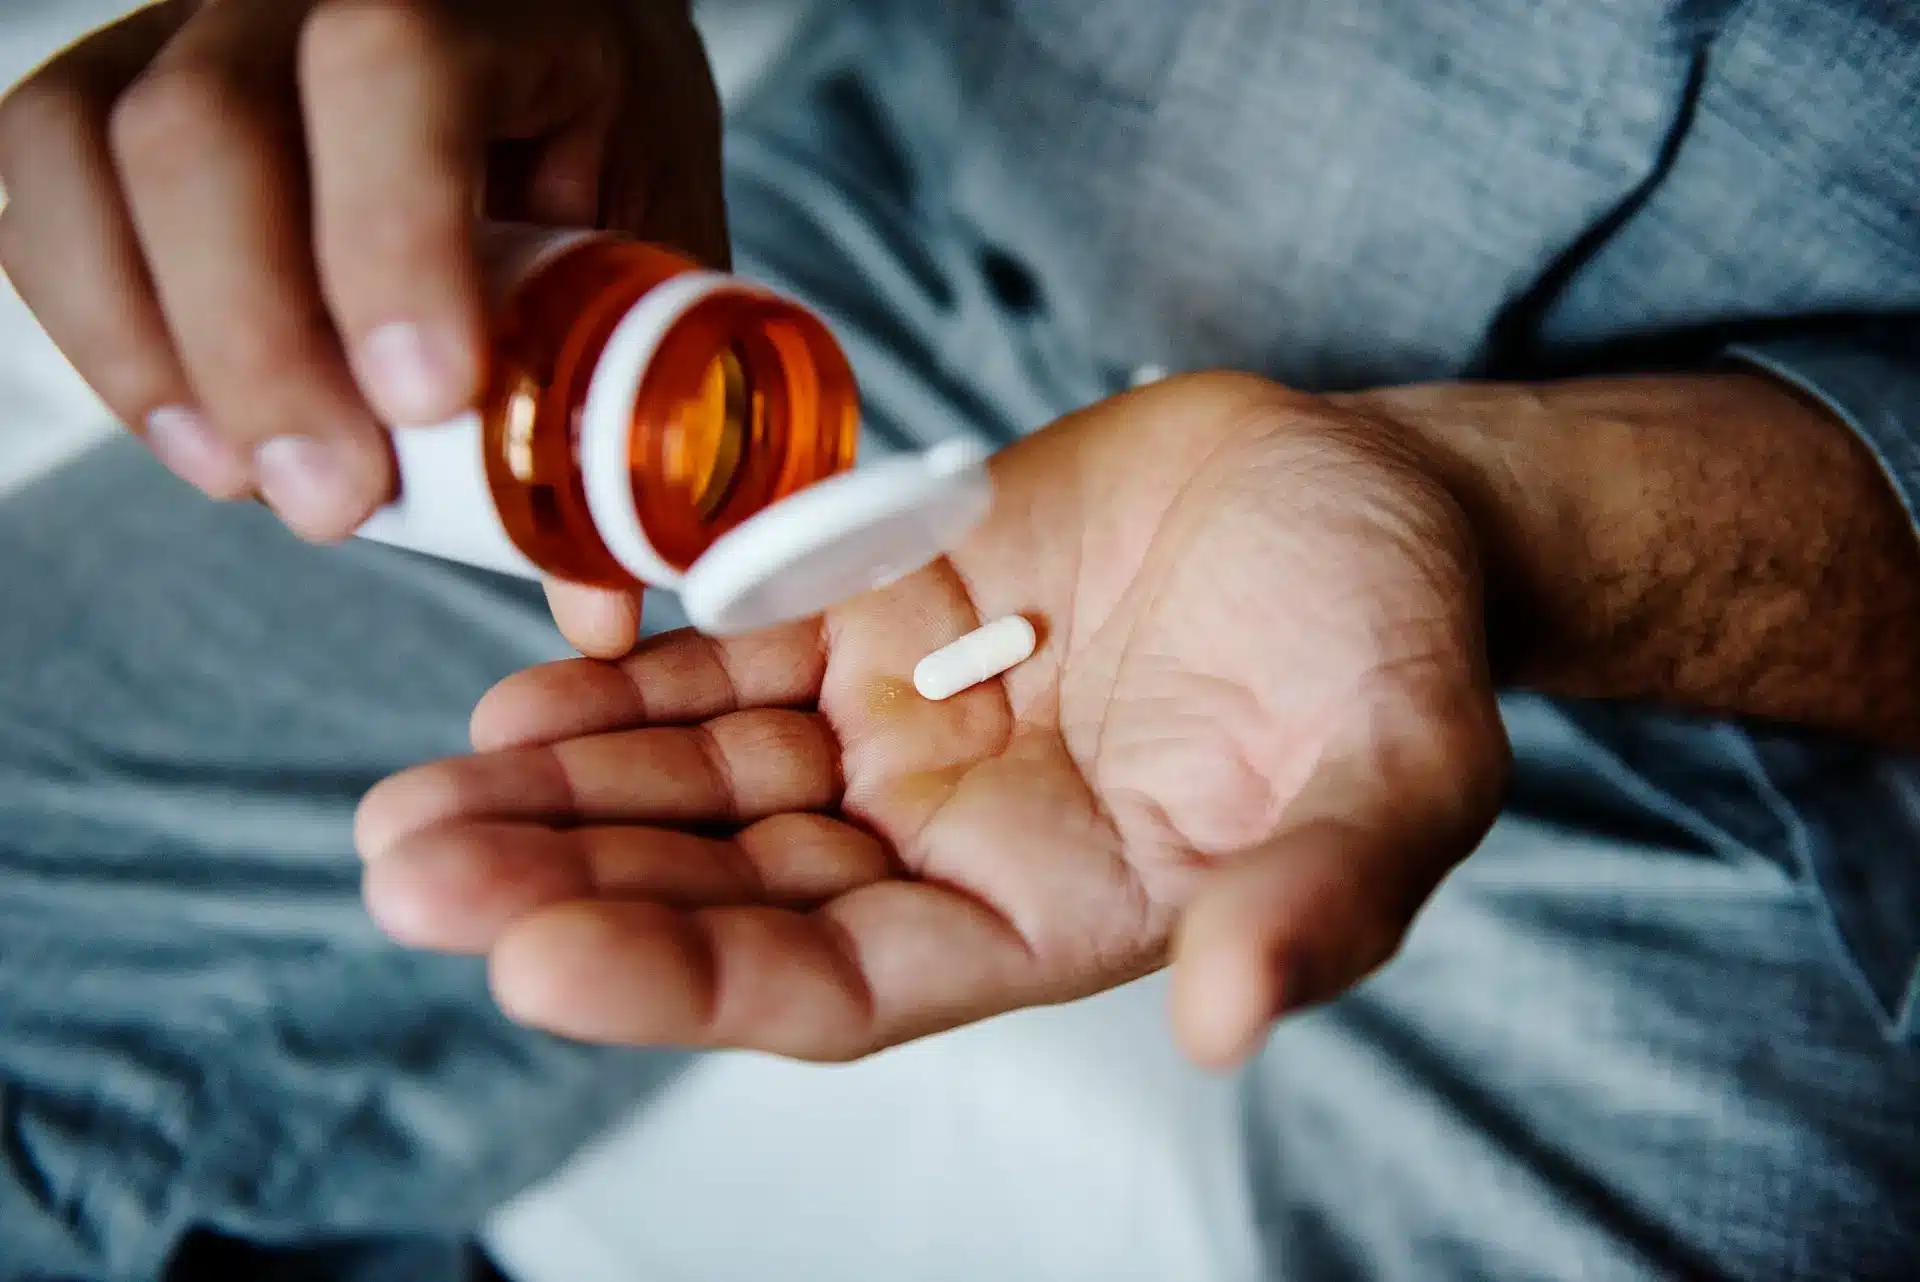 Person pouring capsule from prescription bottle into palm, medication management concept